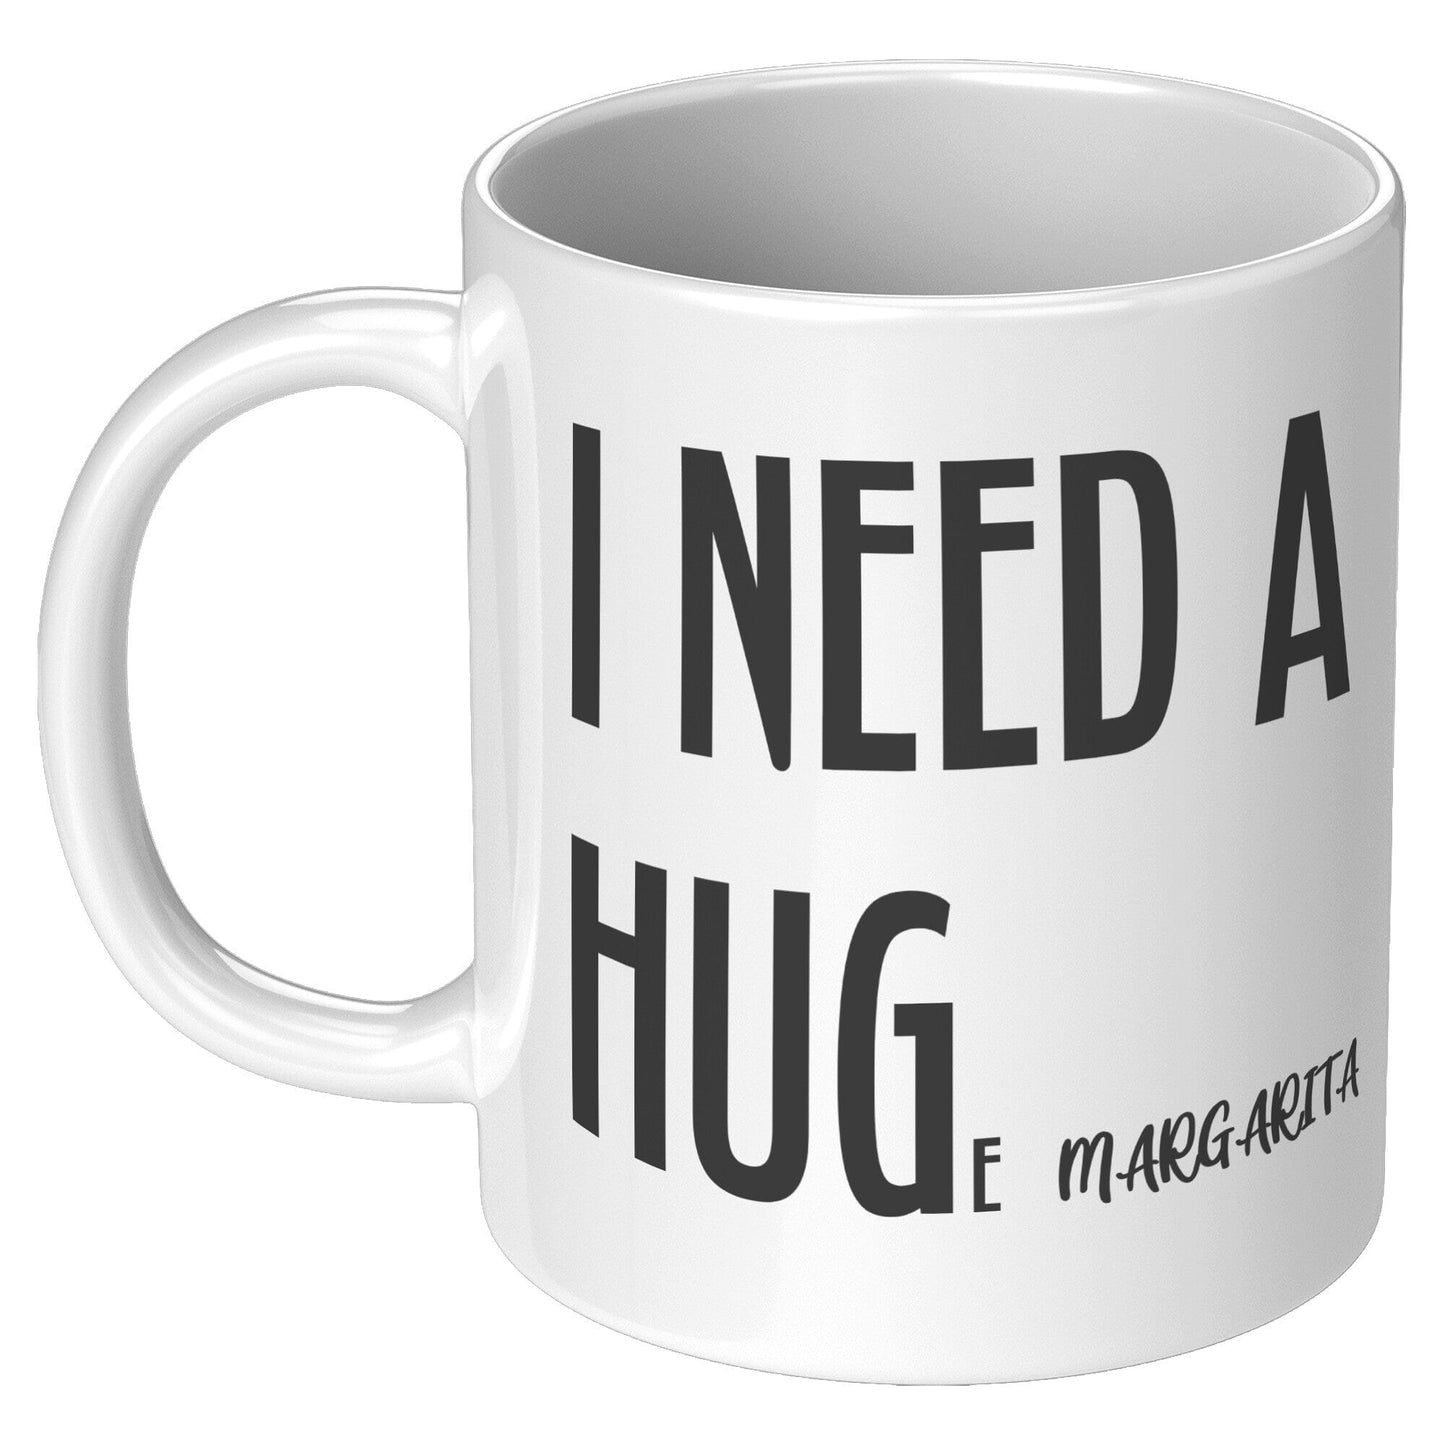 Huge Margarita - Coffee Mug